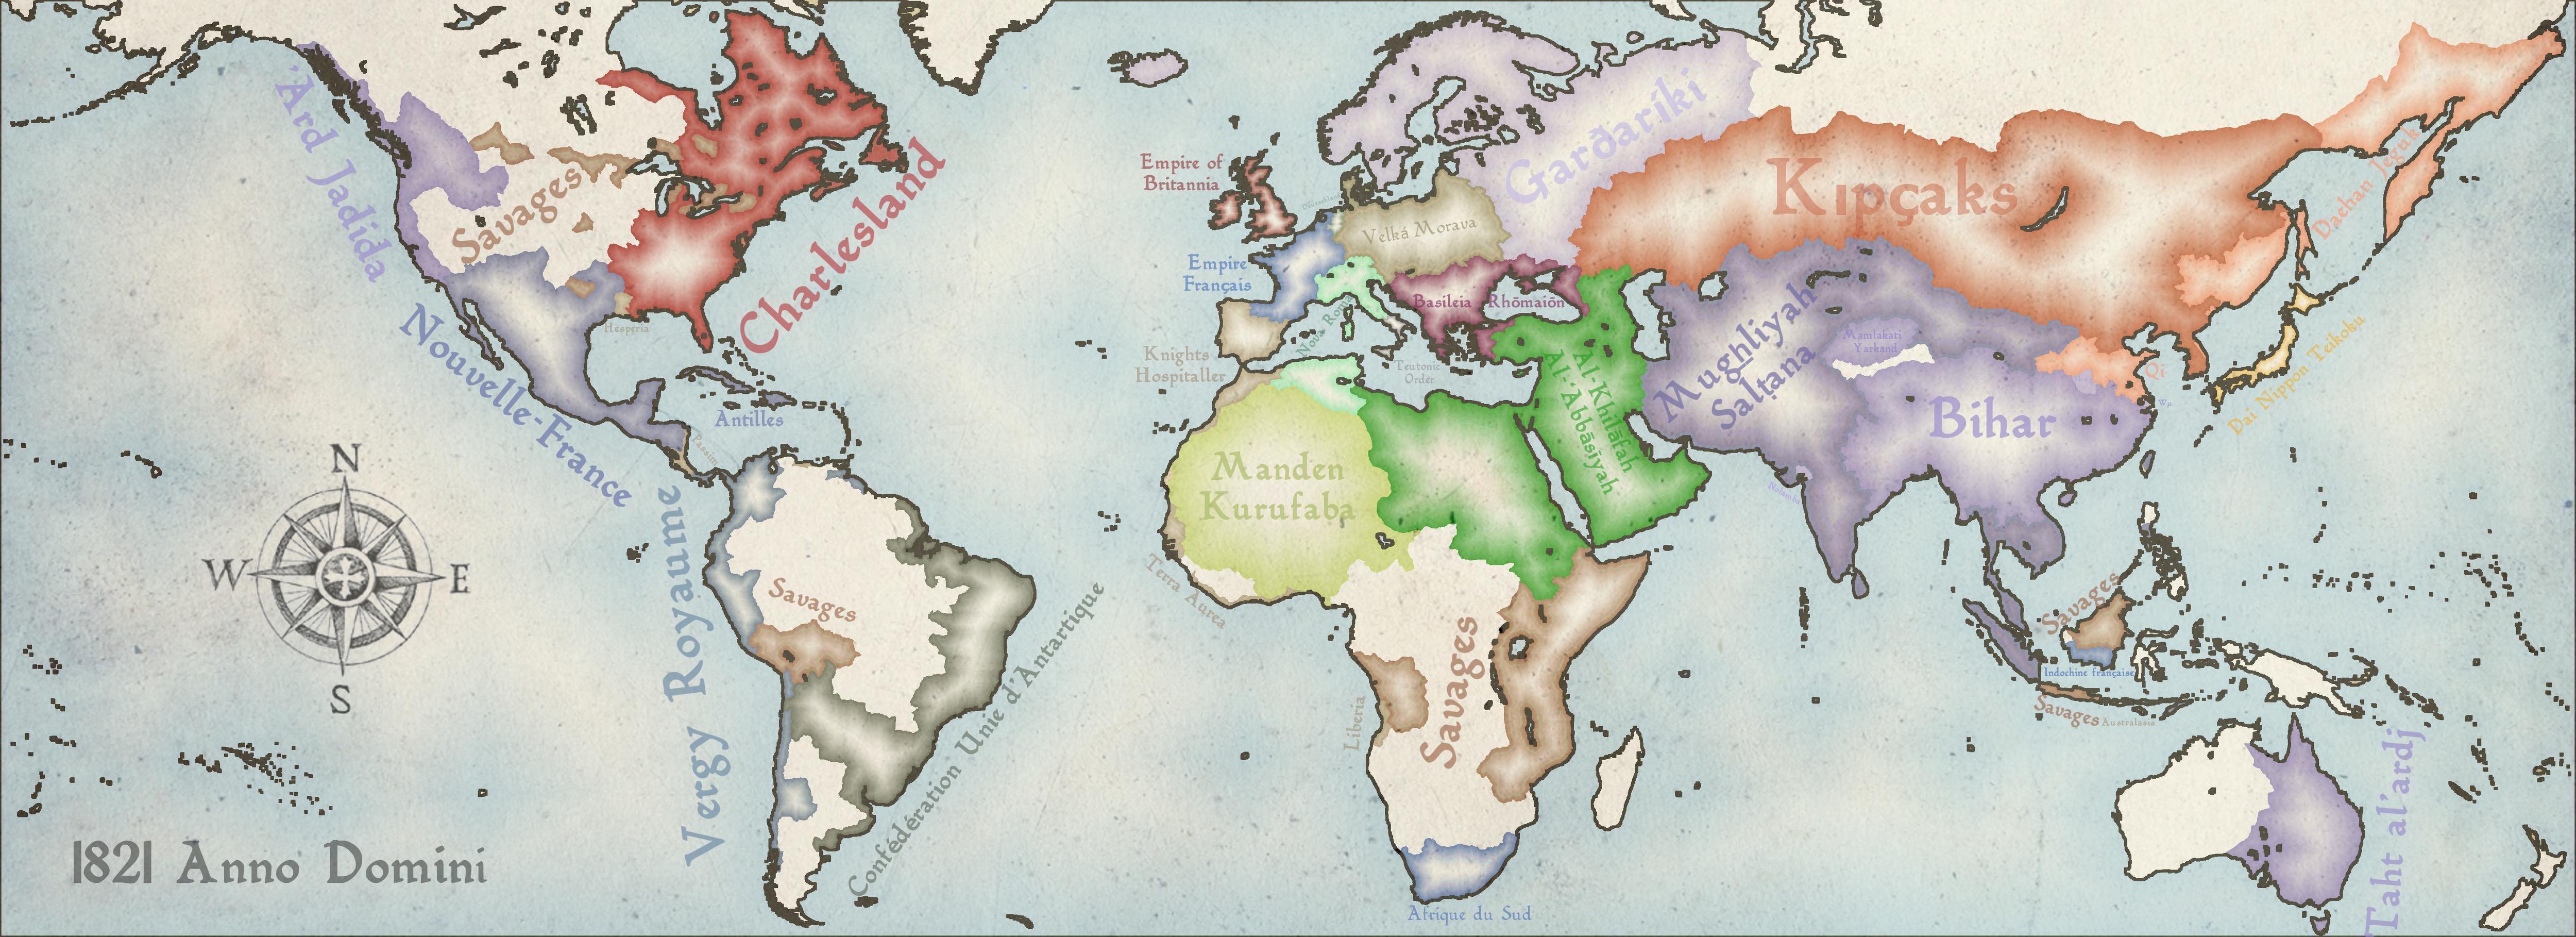 Asian atlas maps